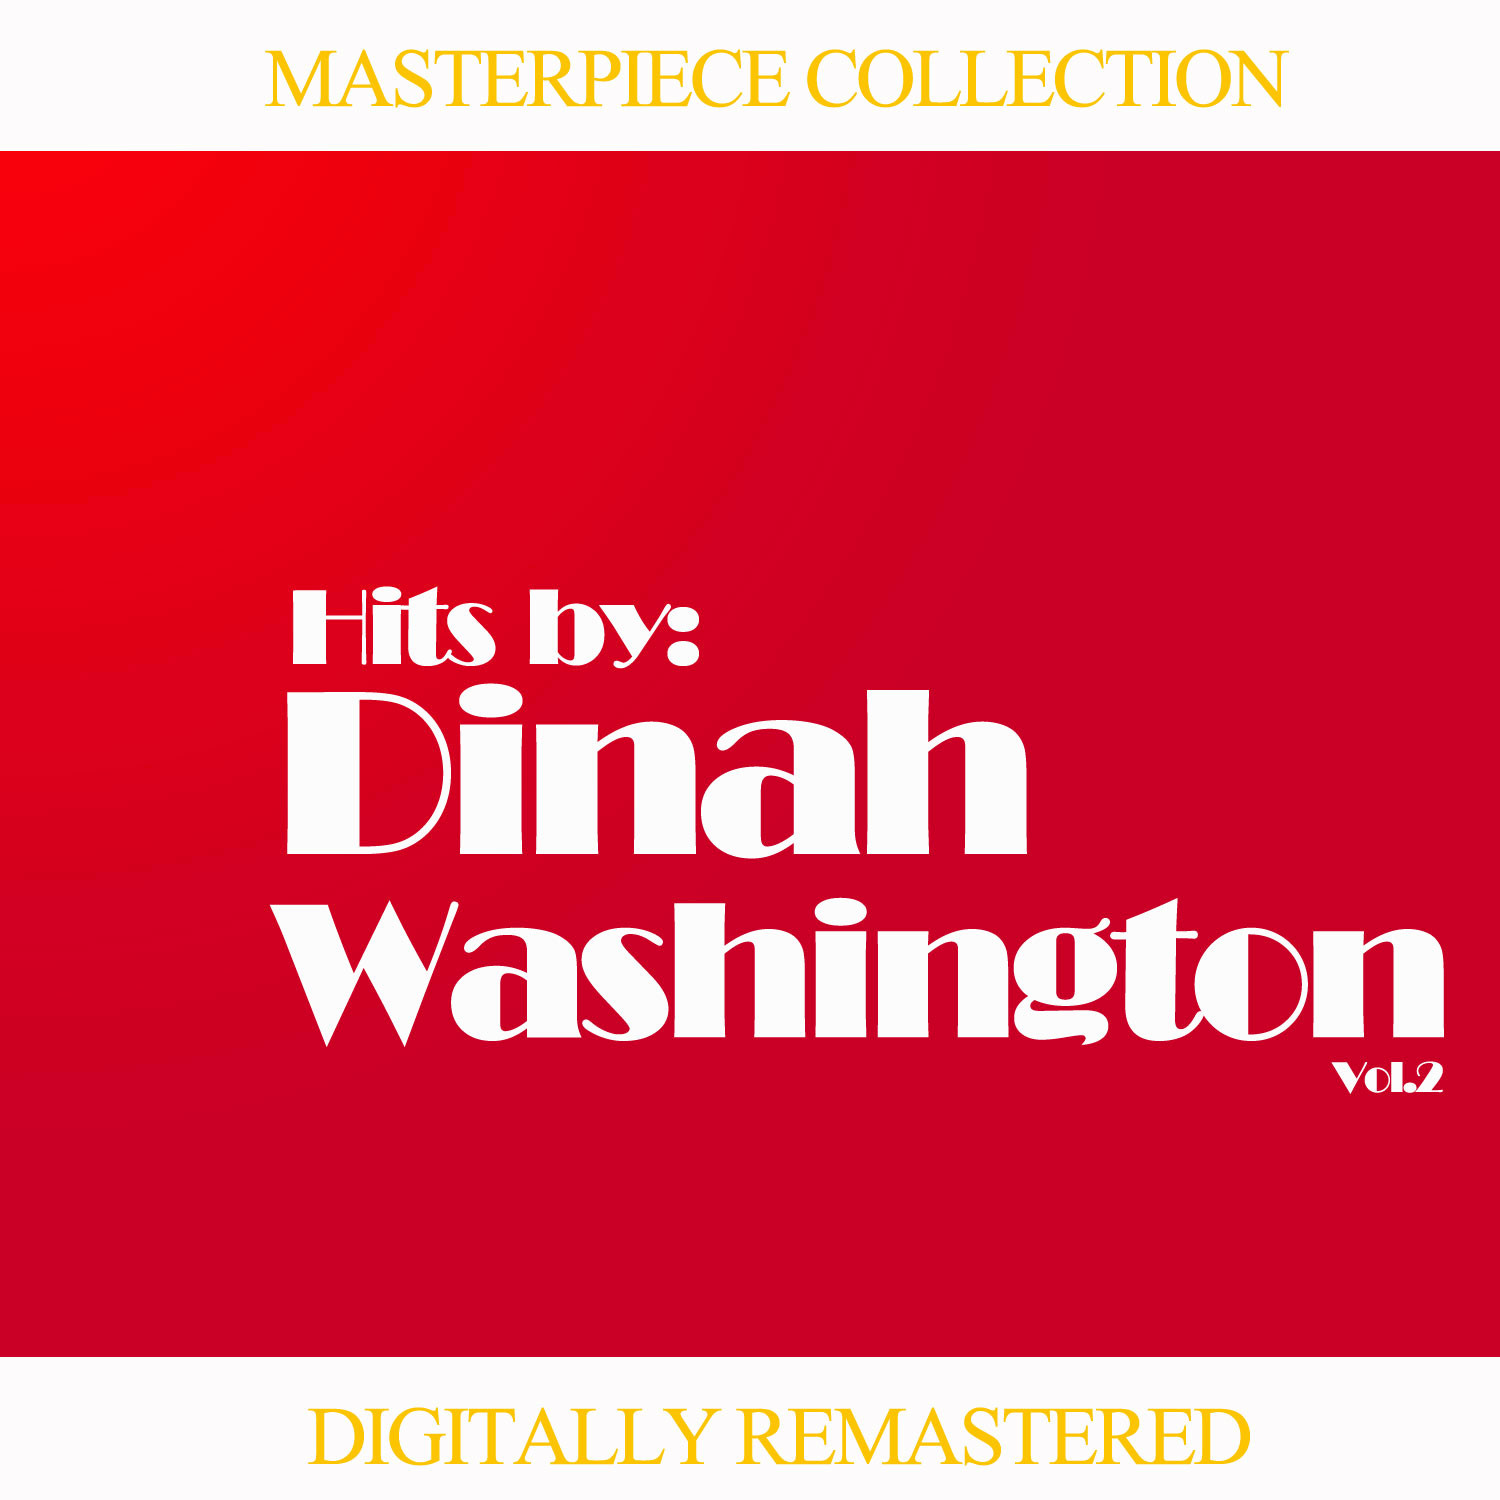 Masterpiece Collection of Dinah Washington, Vol. 2